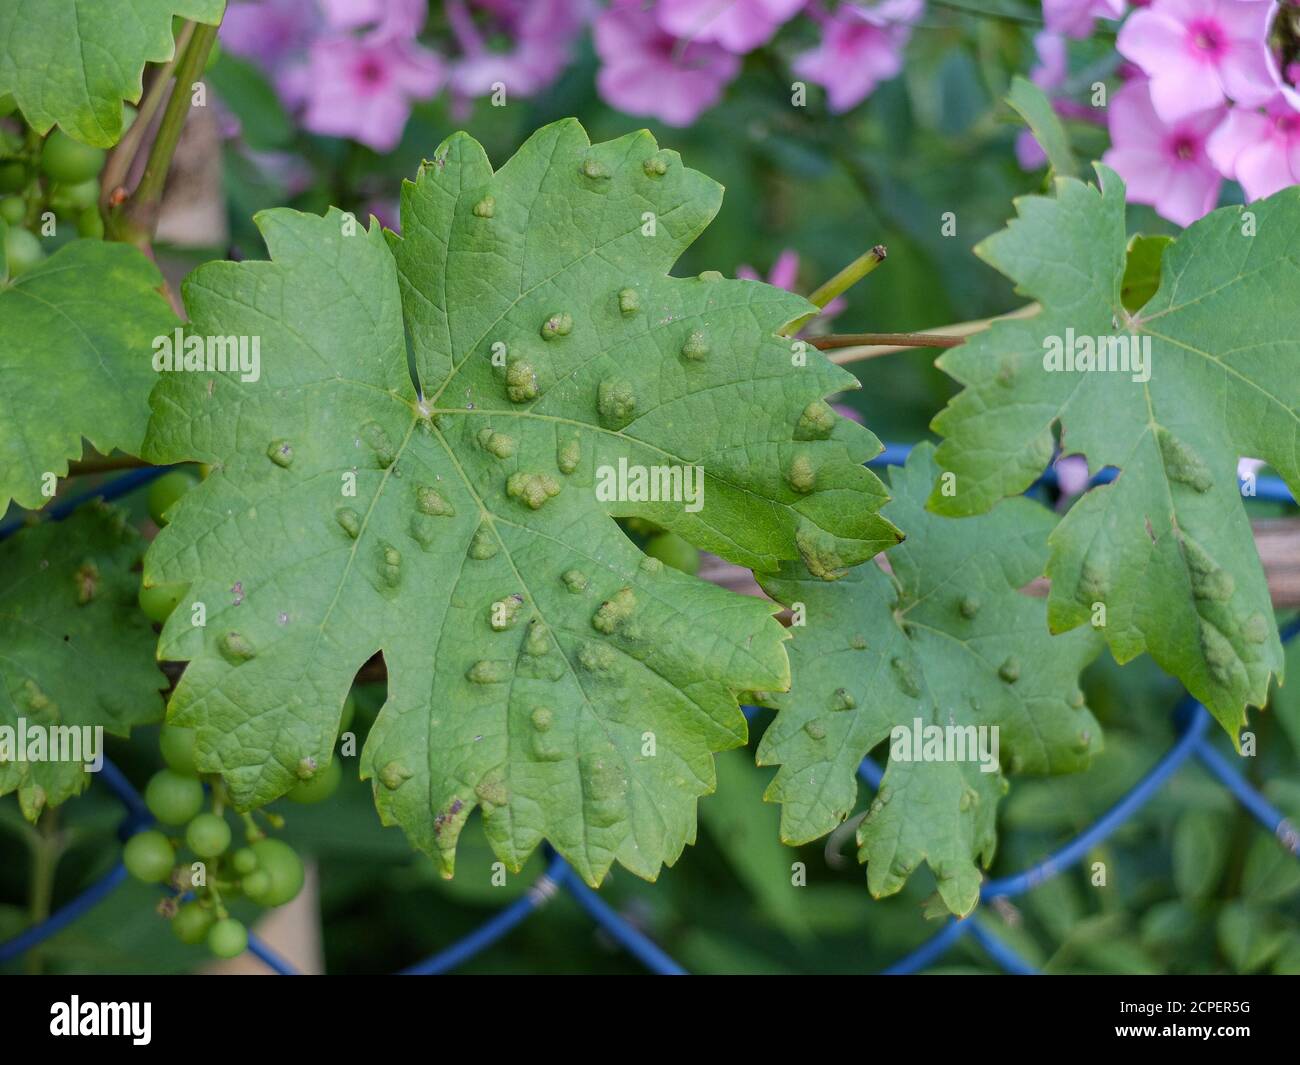 Grape leaves (Vitis vinifera) infested with grape pox mite (Eriophyes vitis) Stock Photo